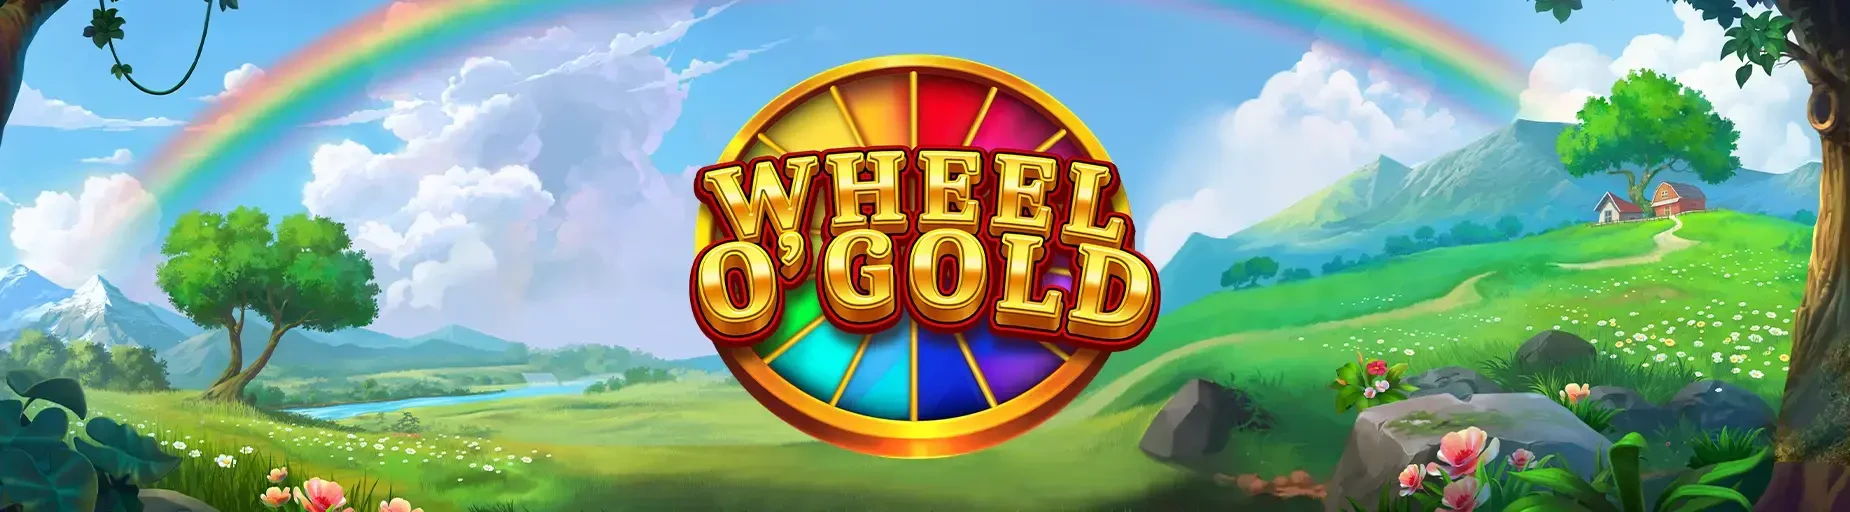 Wheel o' Gold Pragmatic Play